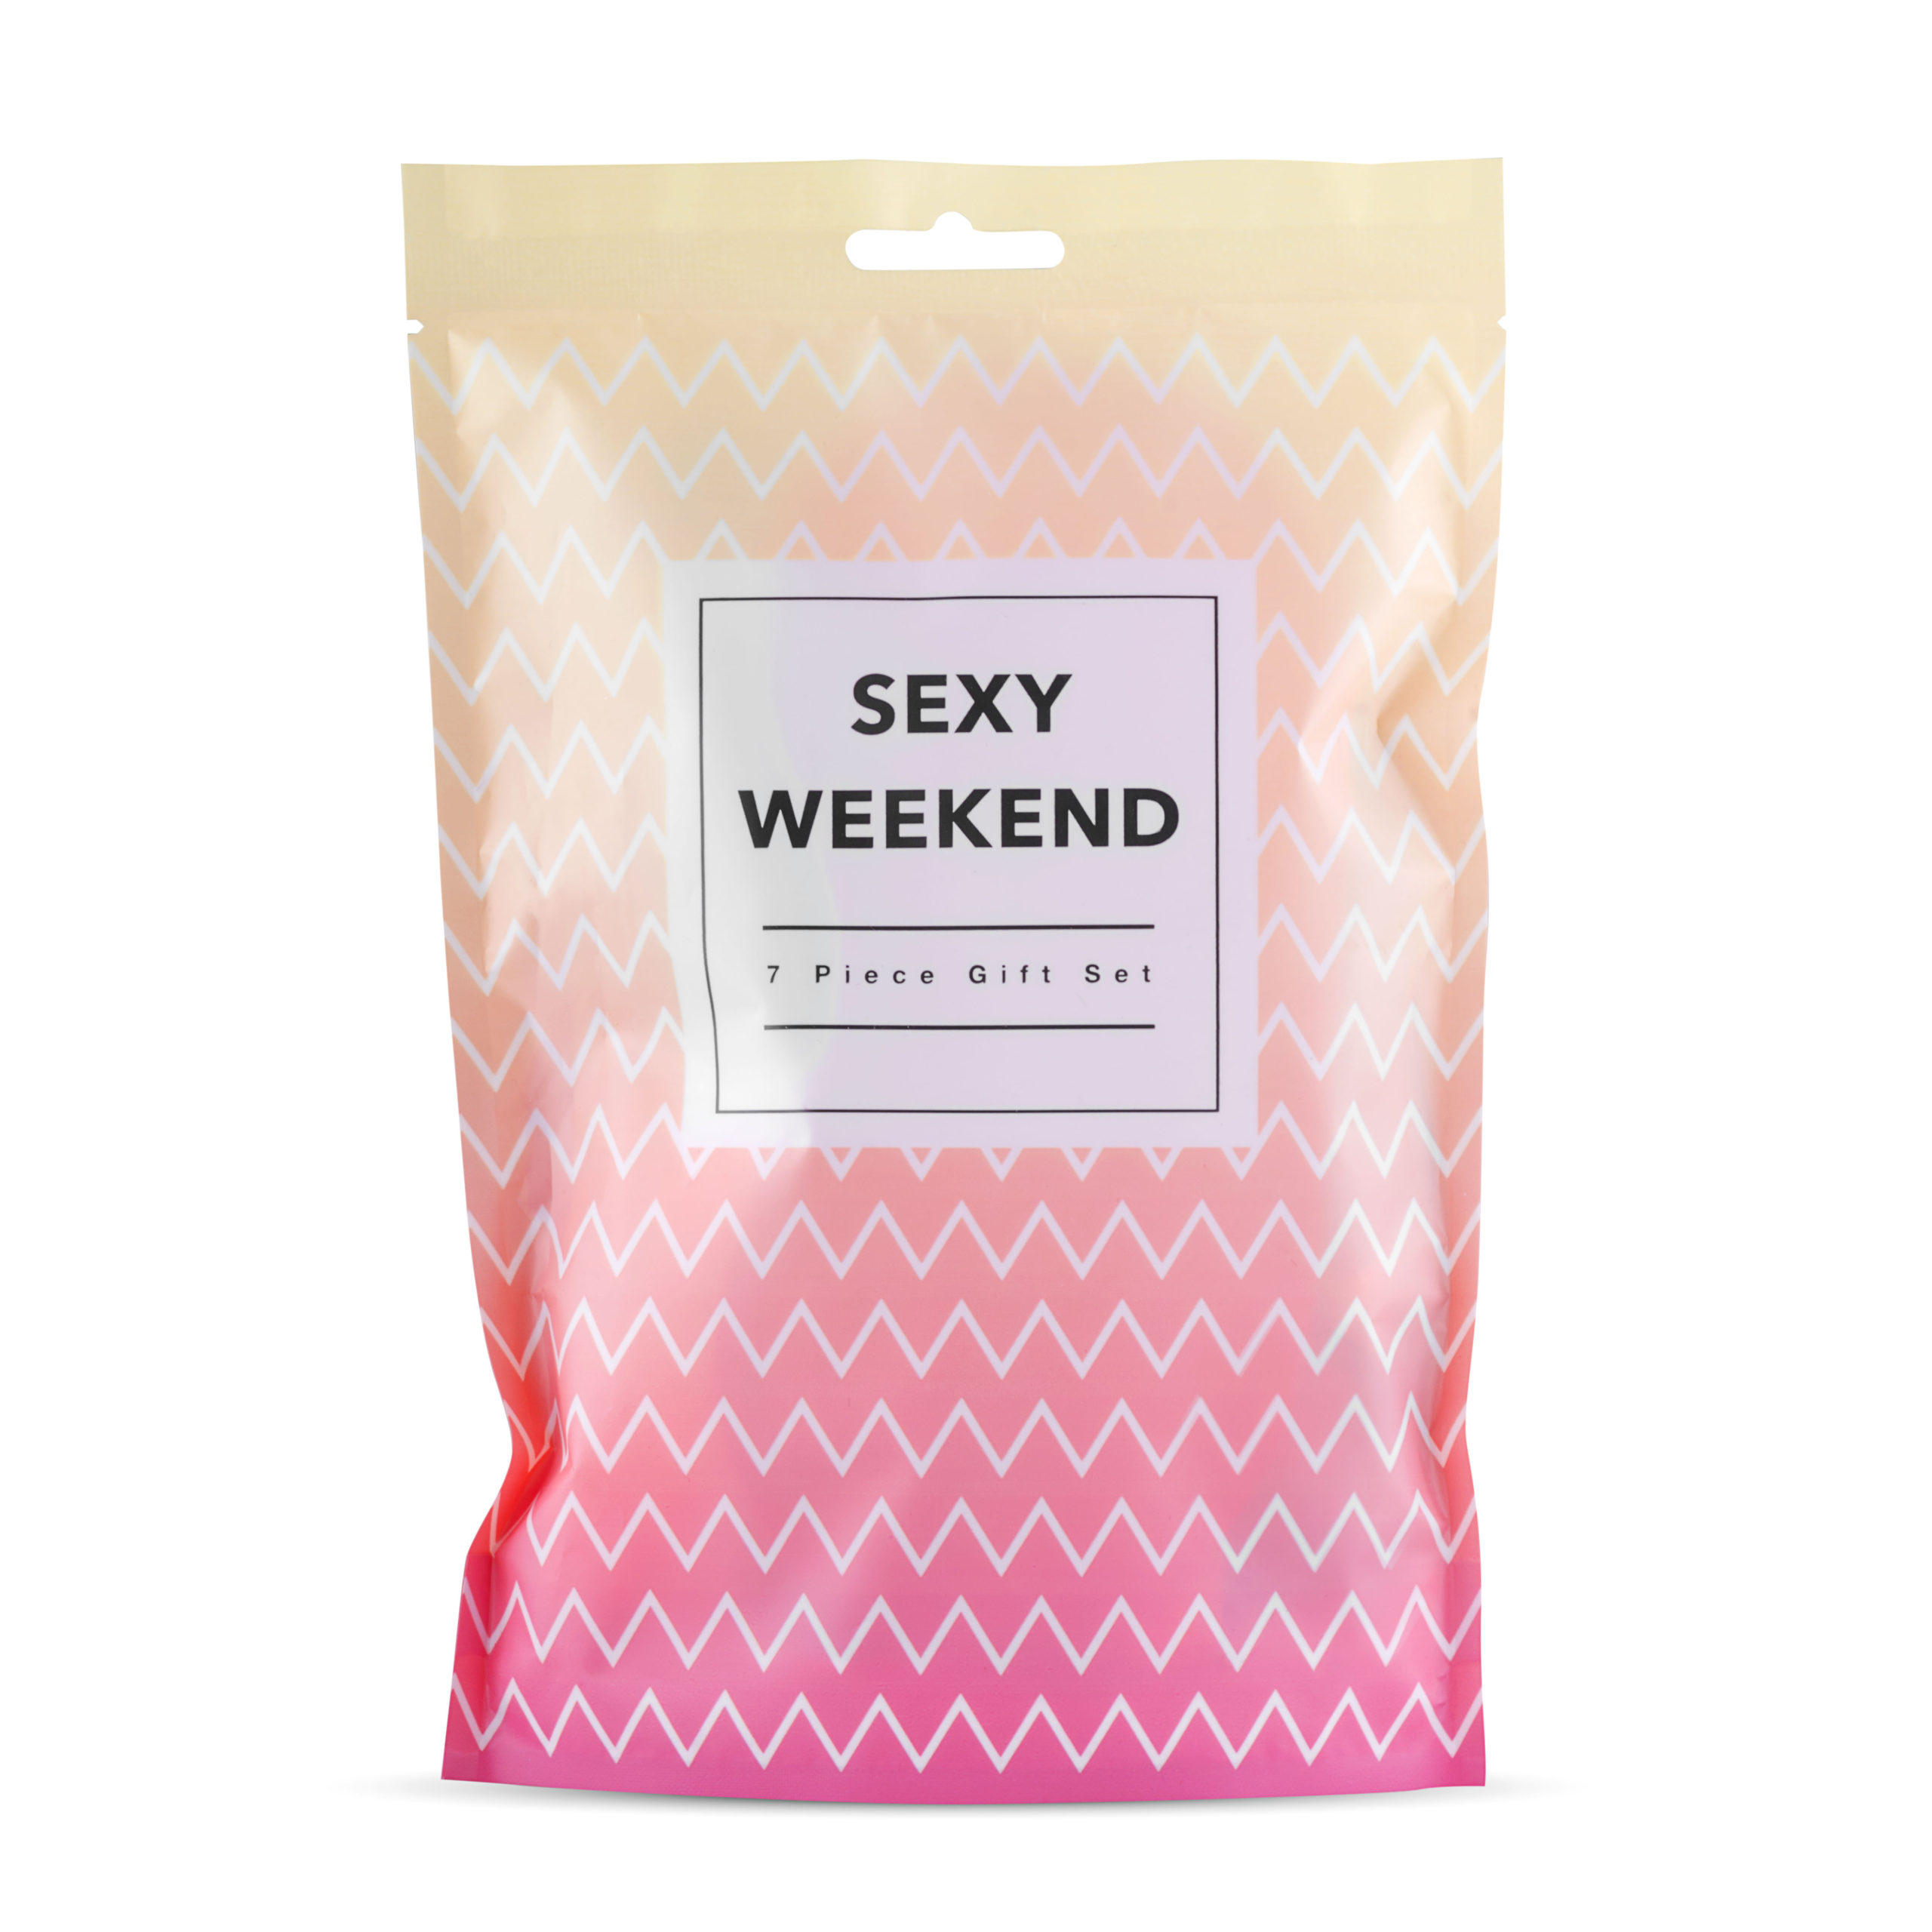 Sexy weekend set